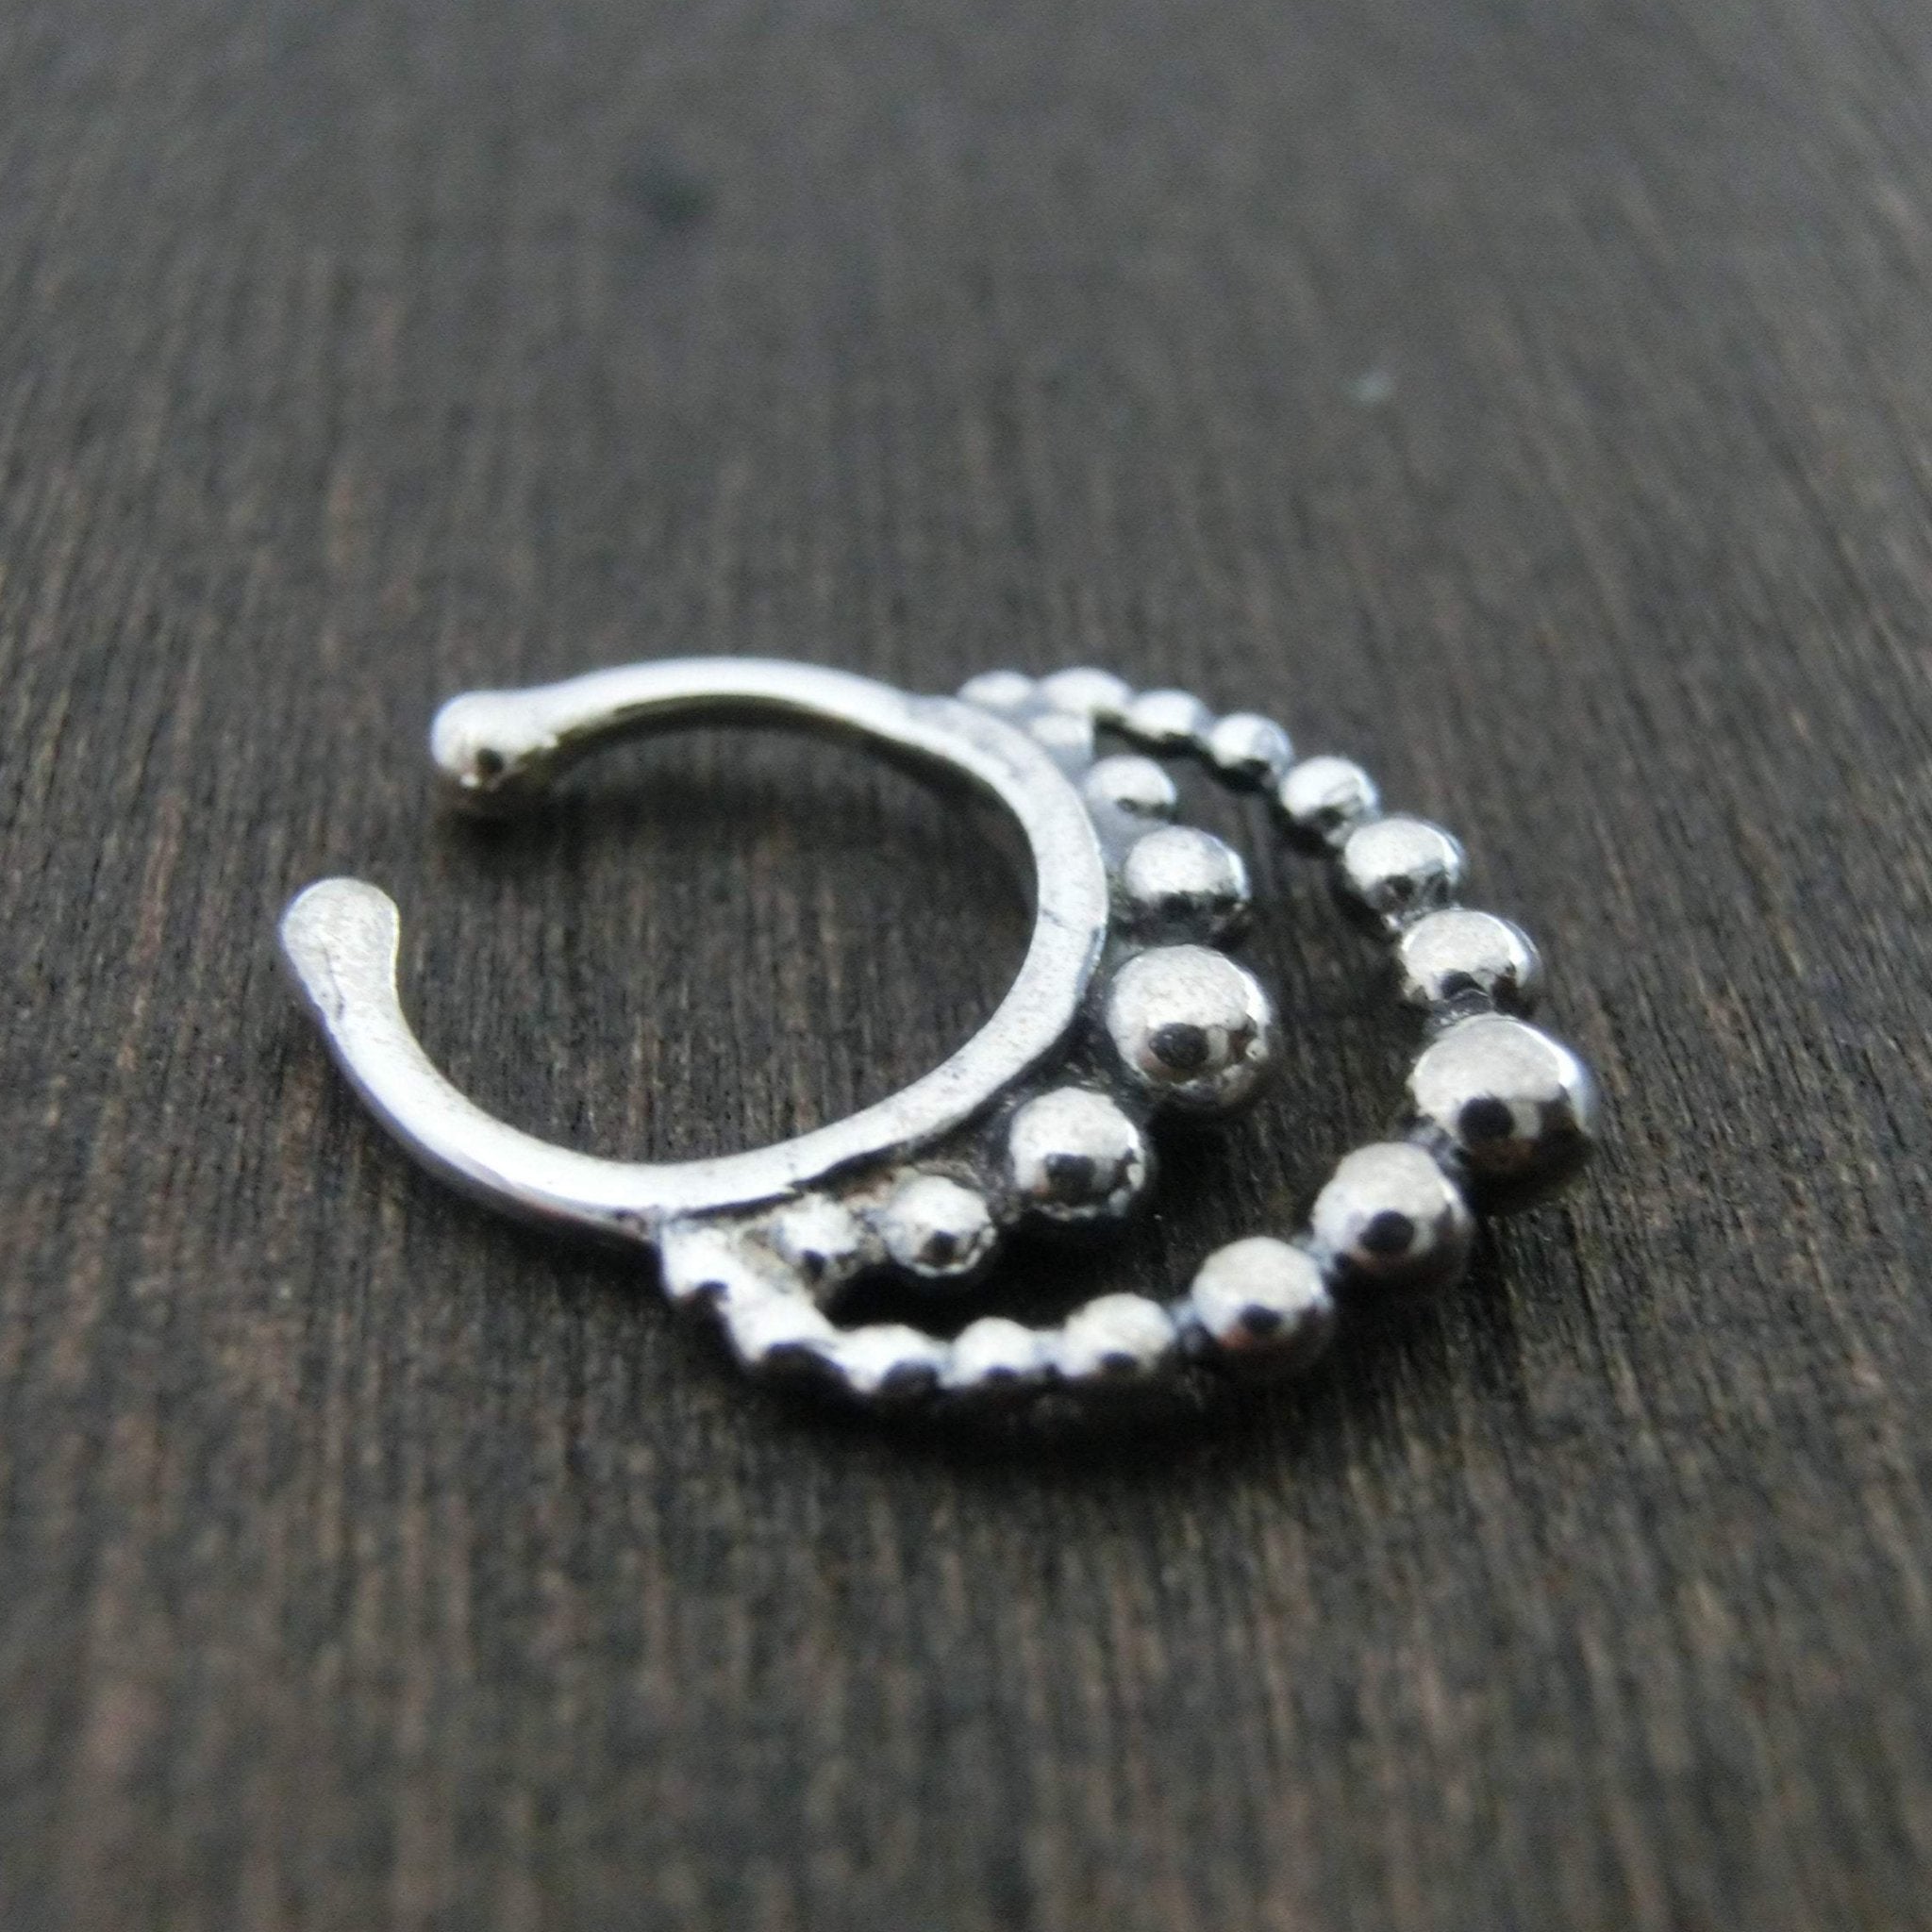 Riya Silver hoops Earrings by Moha